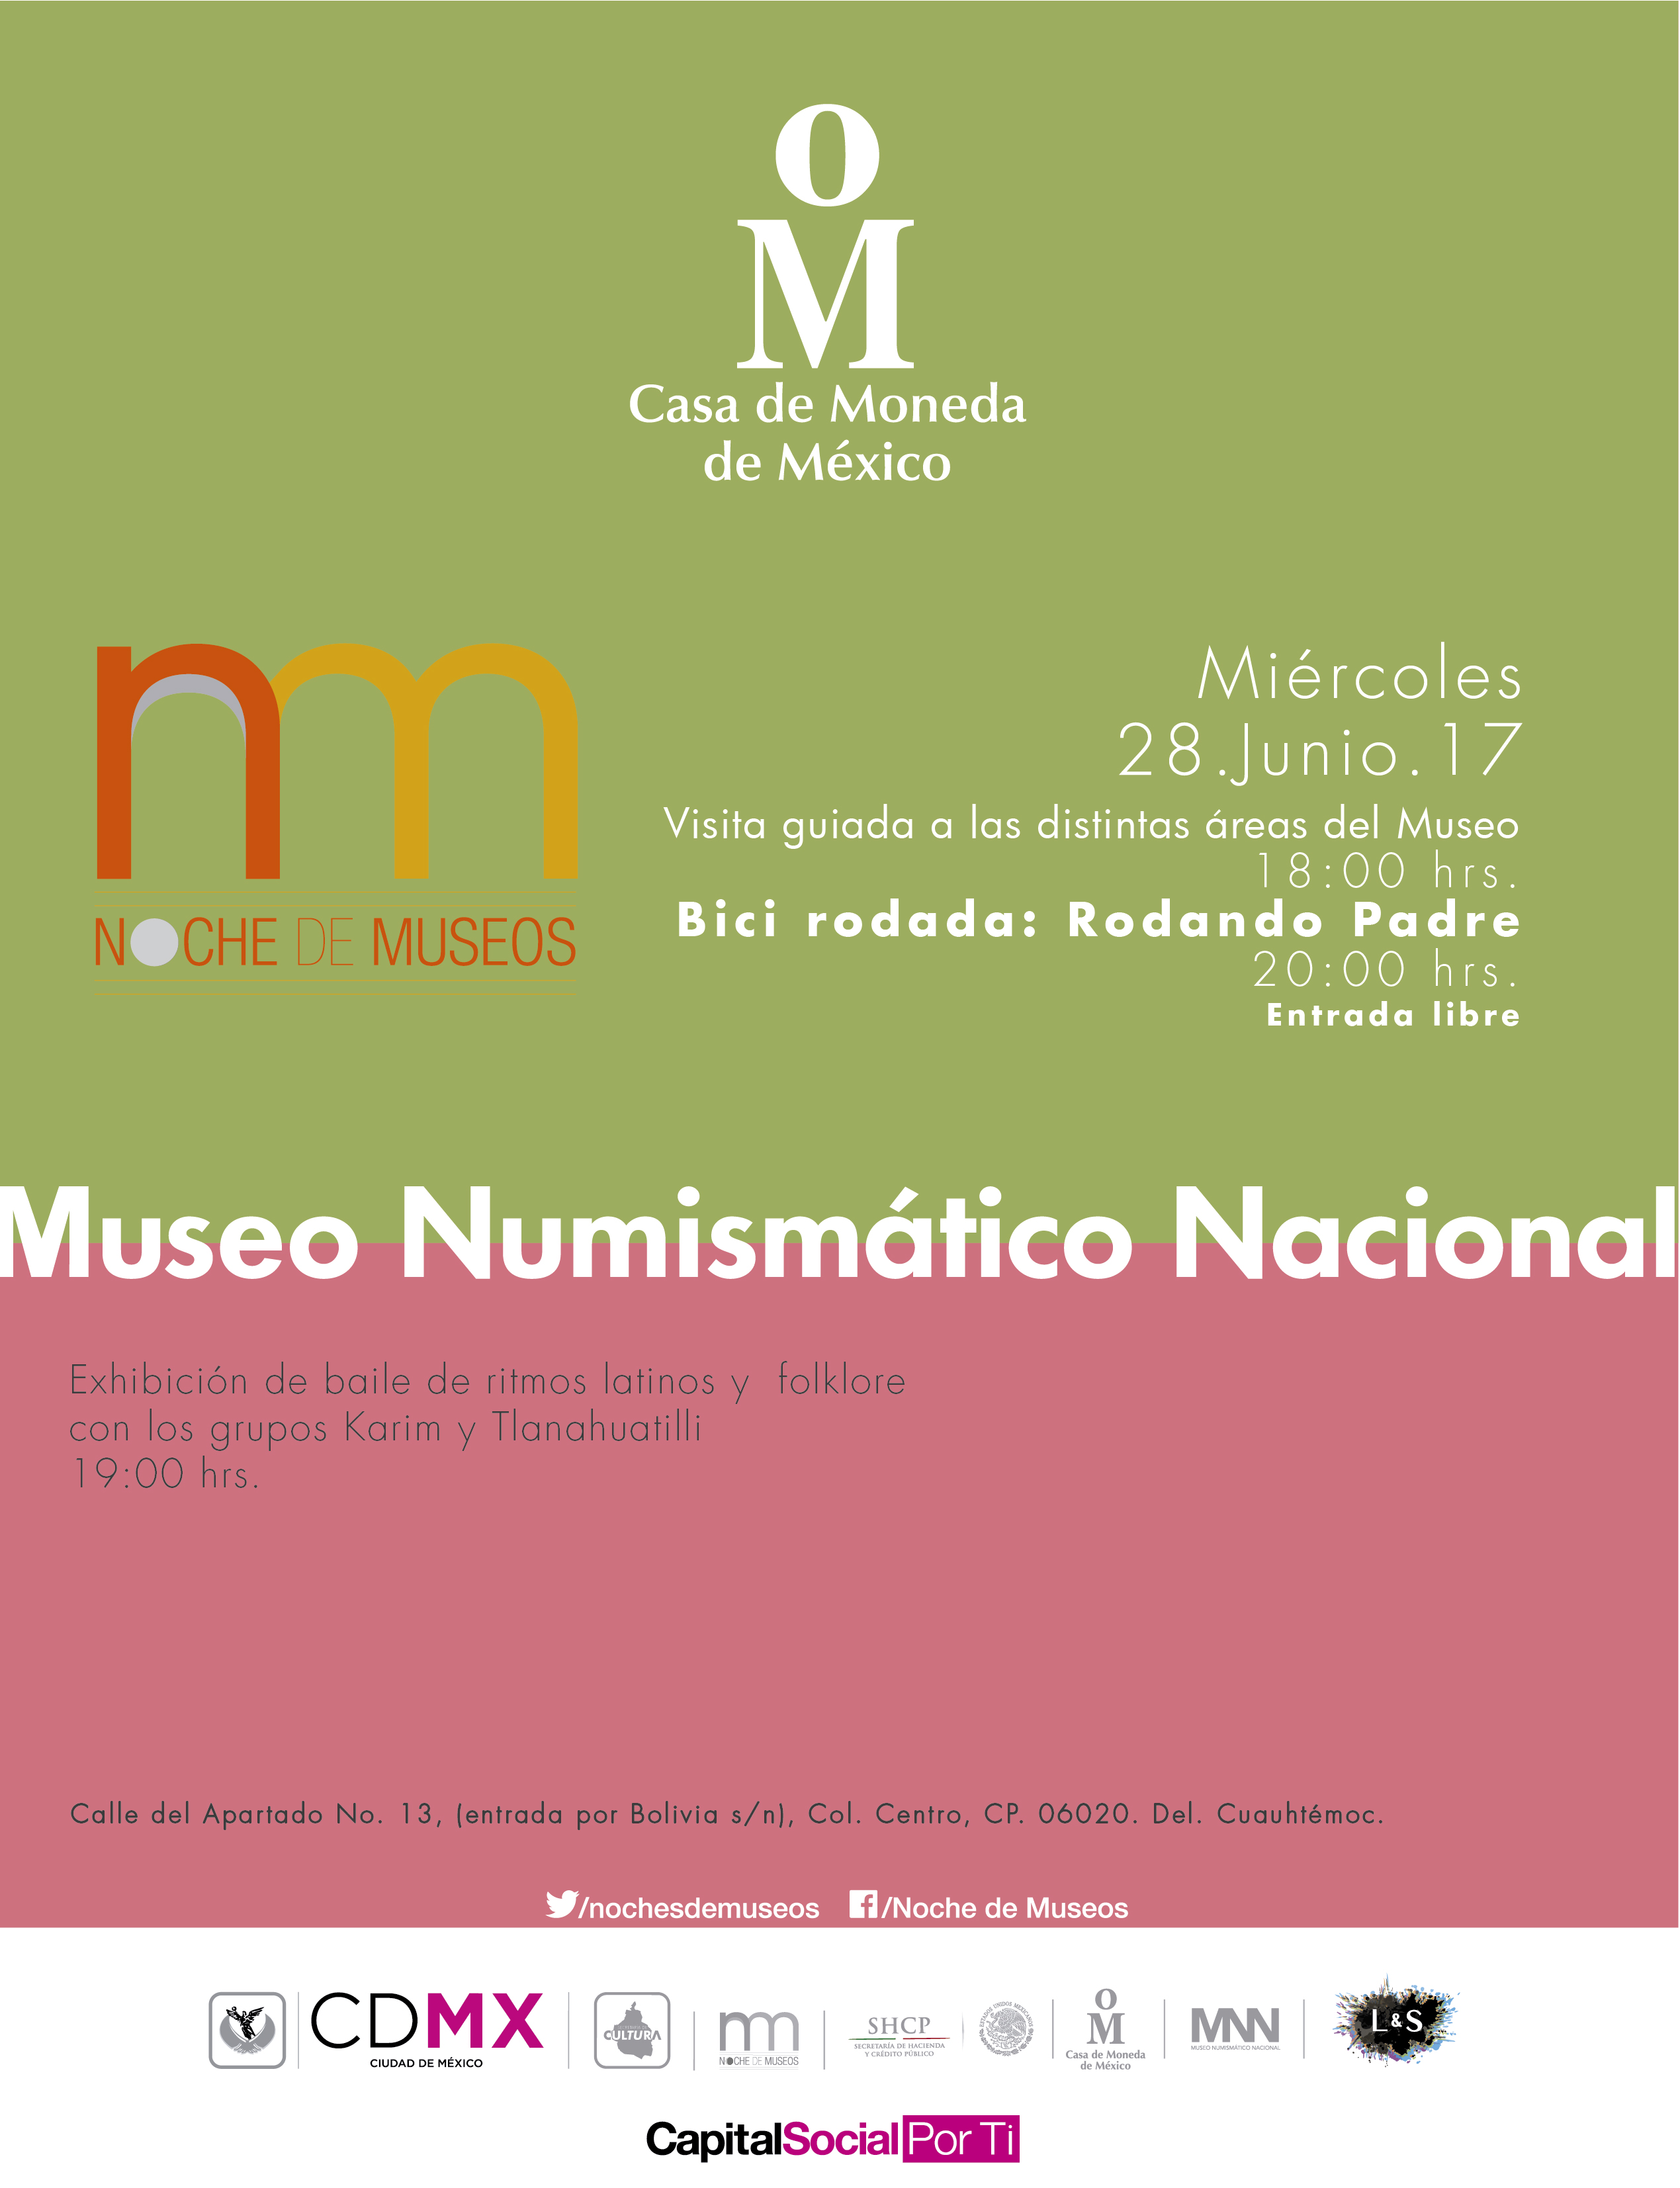 /cms/uploads/image/file/290881/Noche_de_Museos_junio_2017.jpg